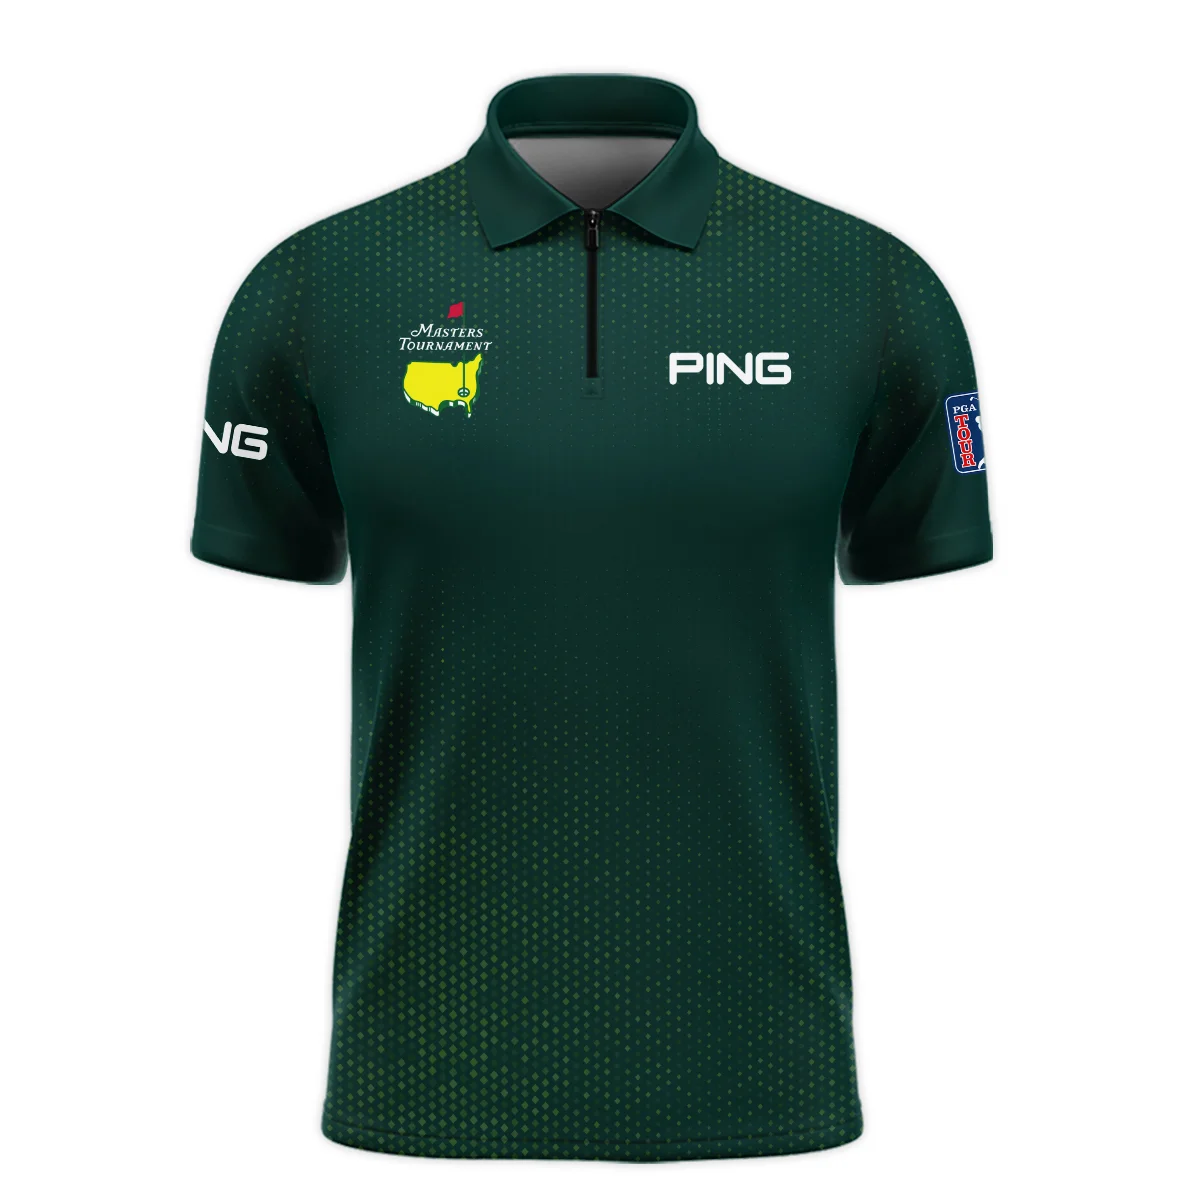 Golf Sport Masters Tournament Ping Sleeveless Jacket Sports Dinamond Shape Dark Green Sleeveless Jacket